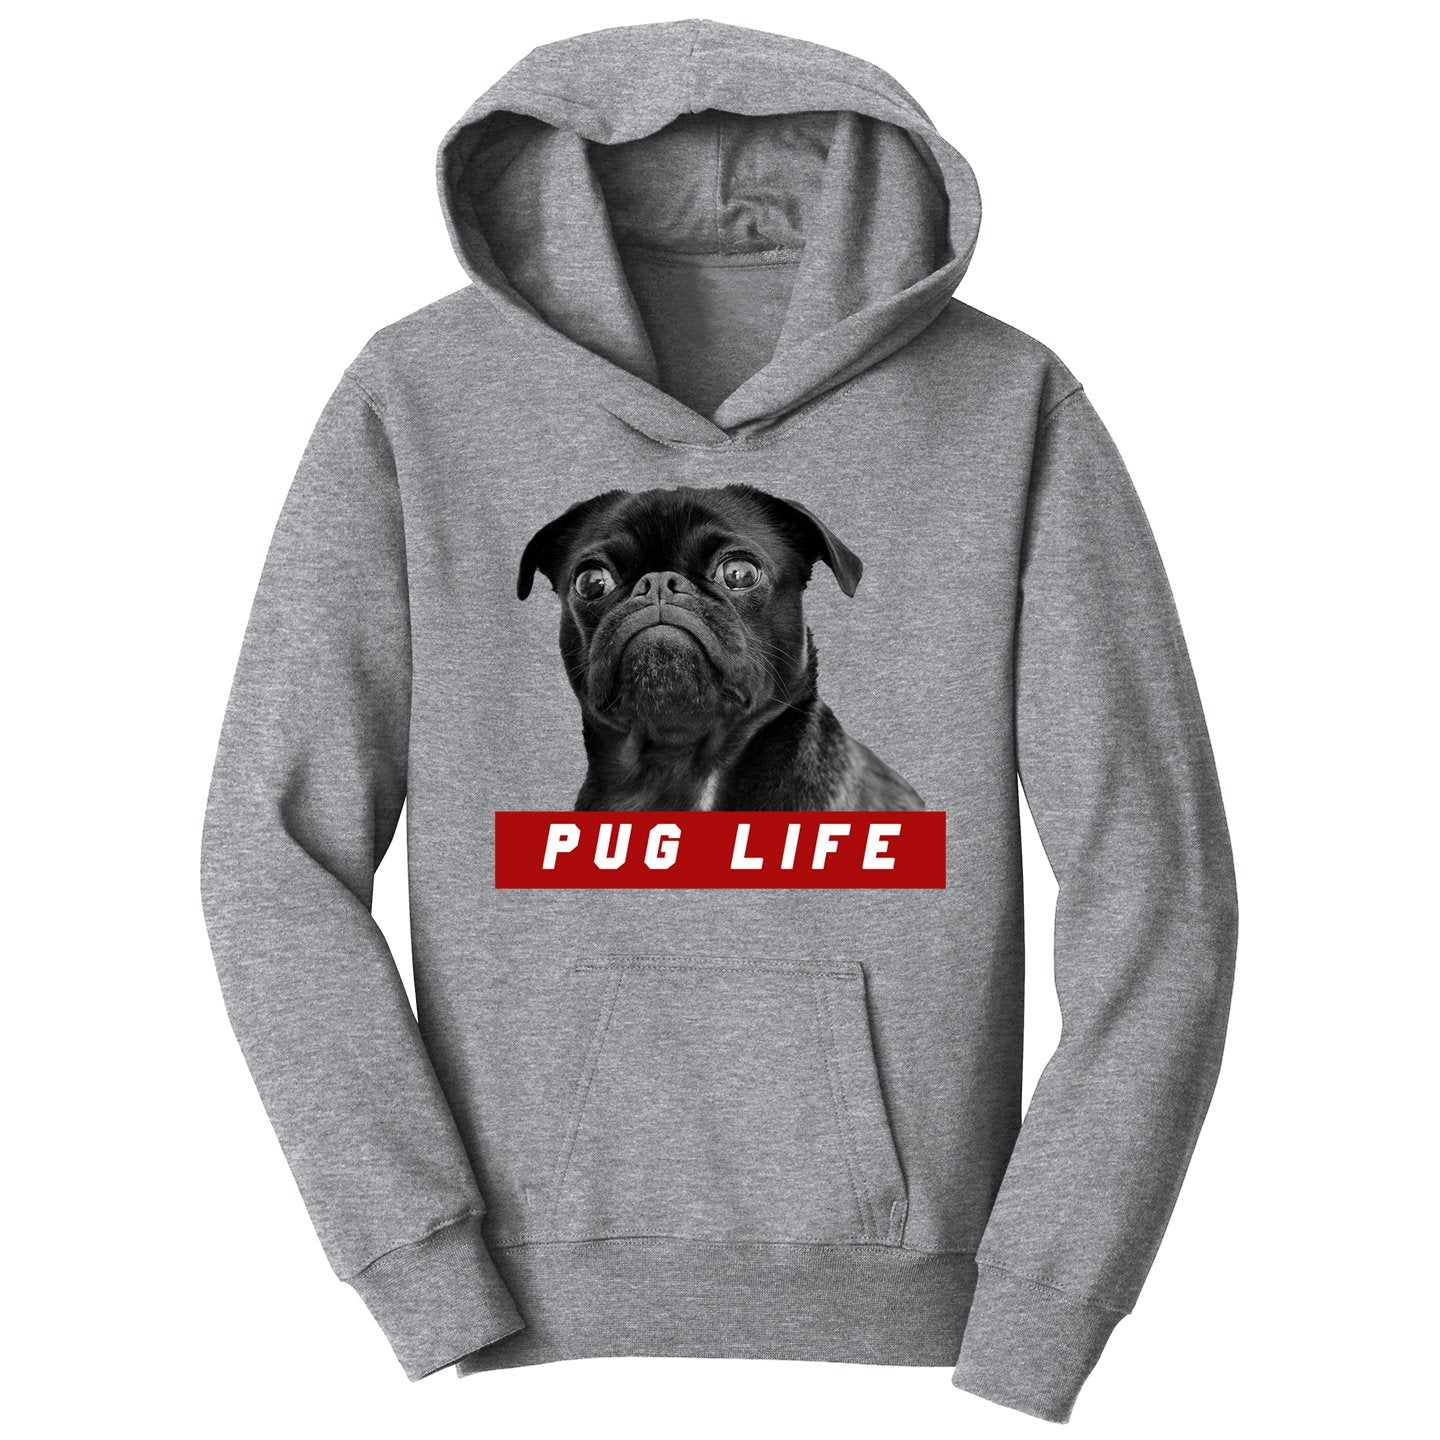 Pug Life - Kids' Unisex Hoodie Sweatshirt